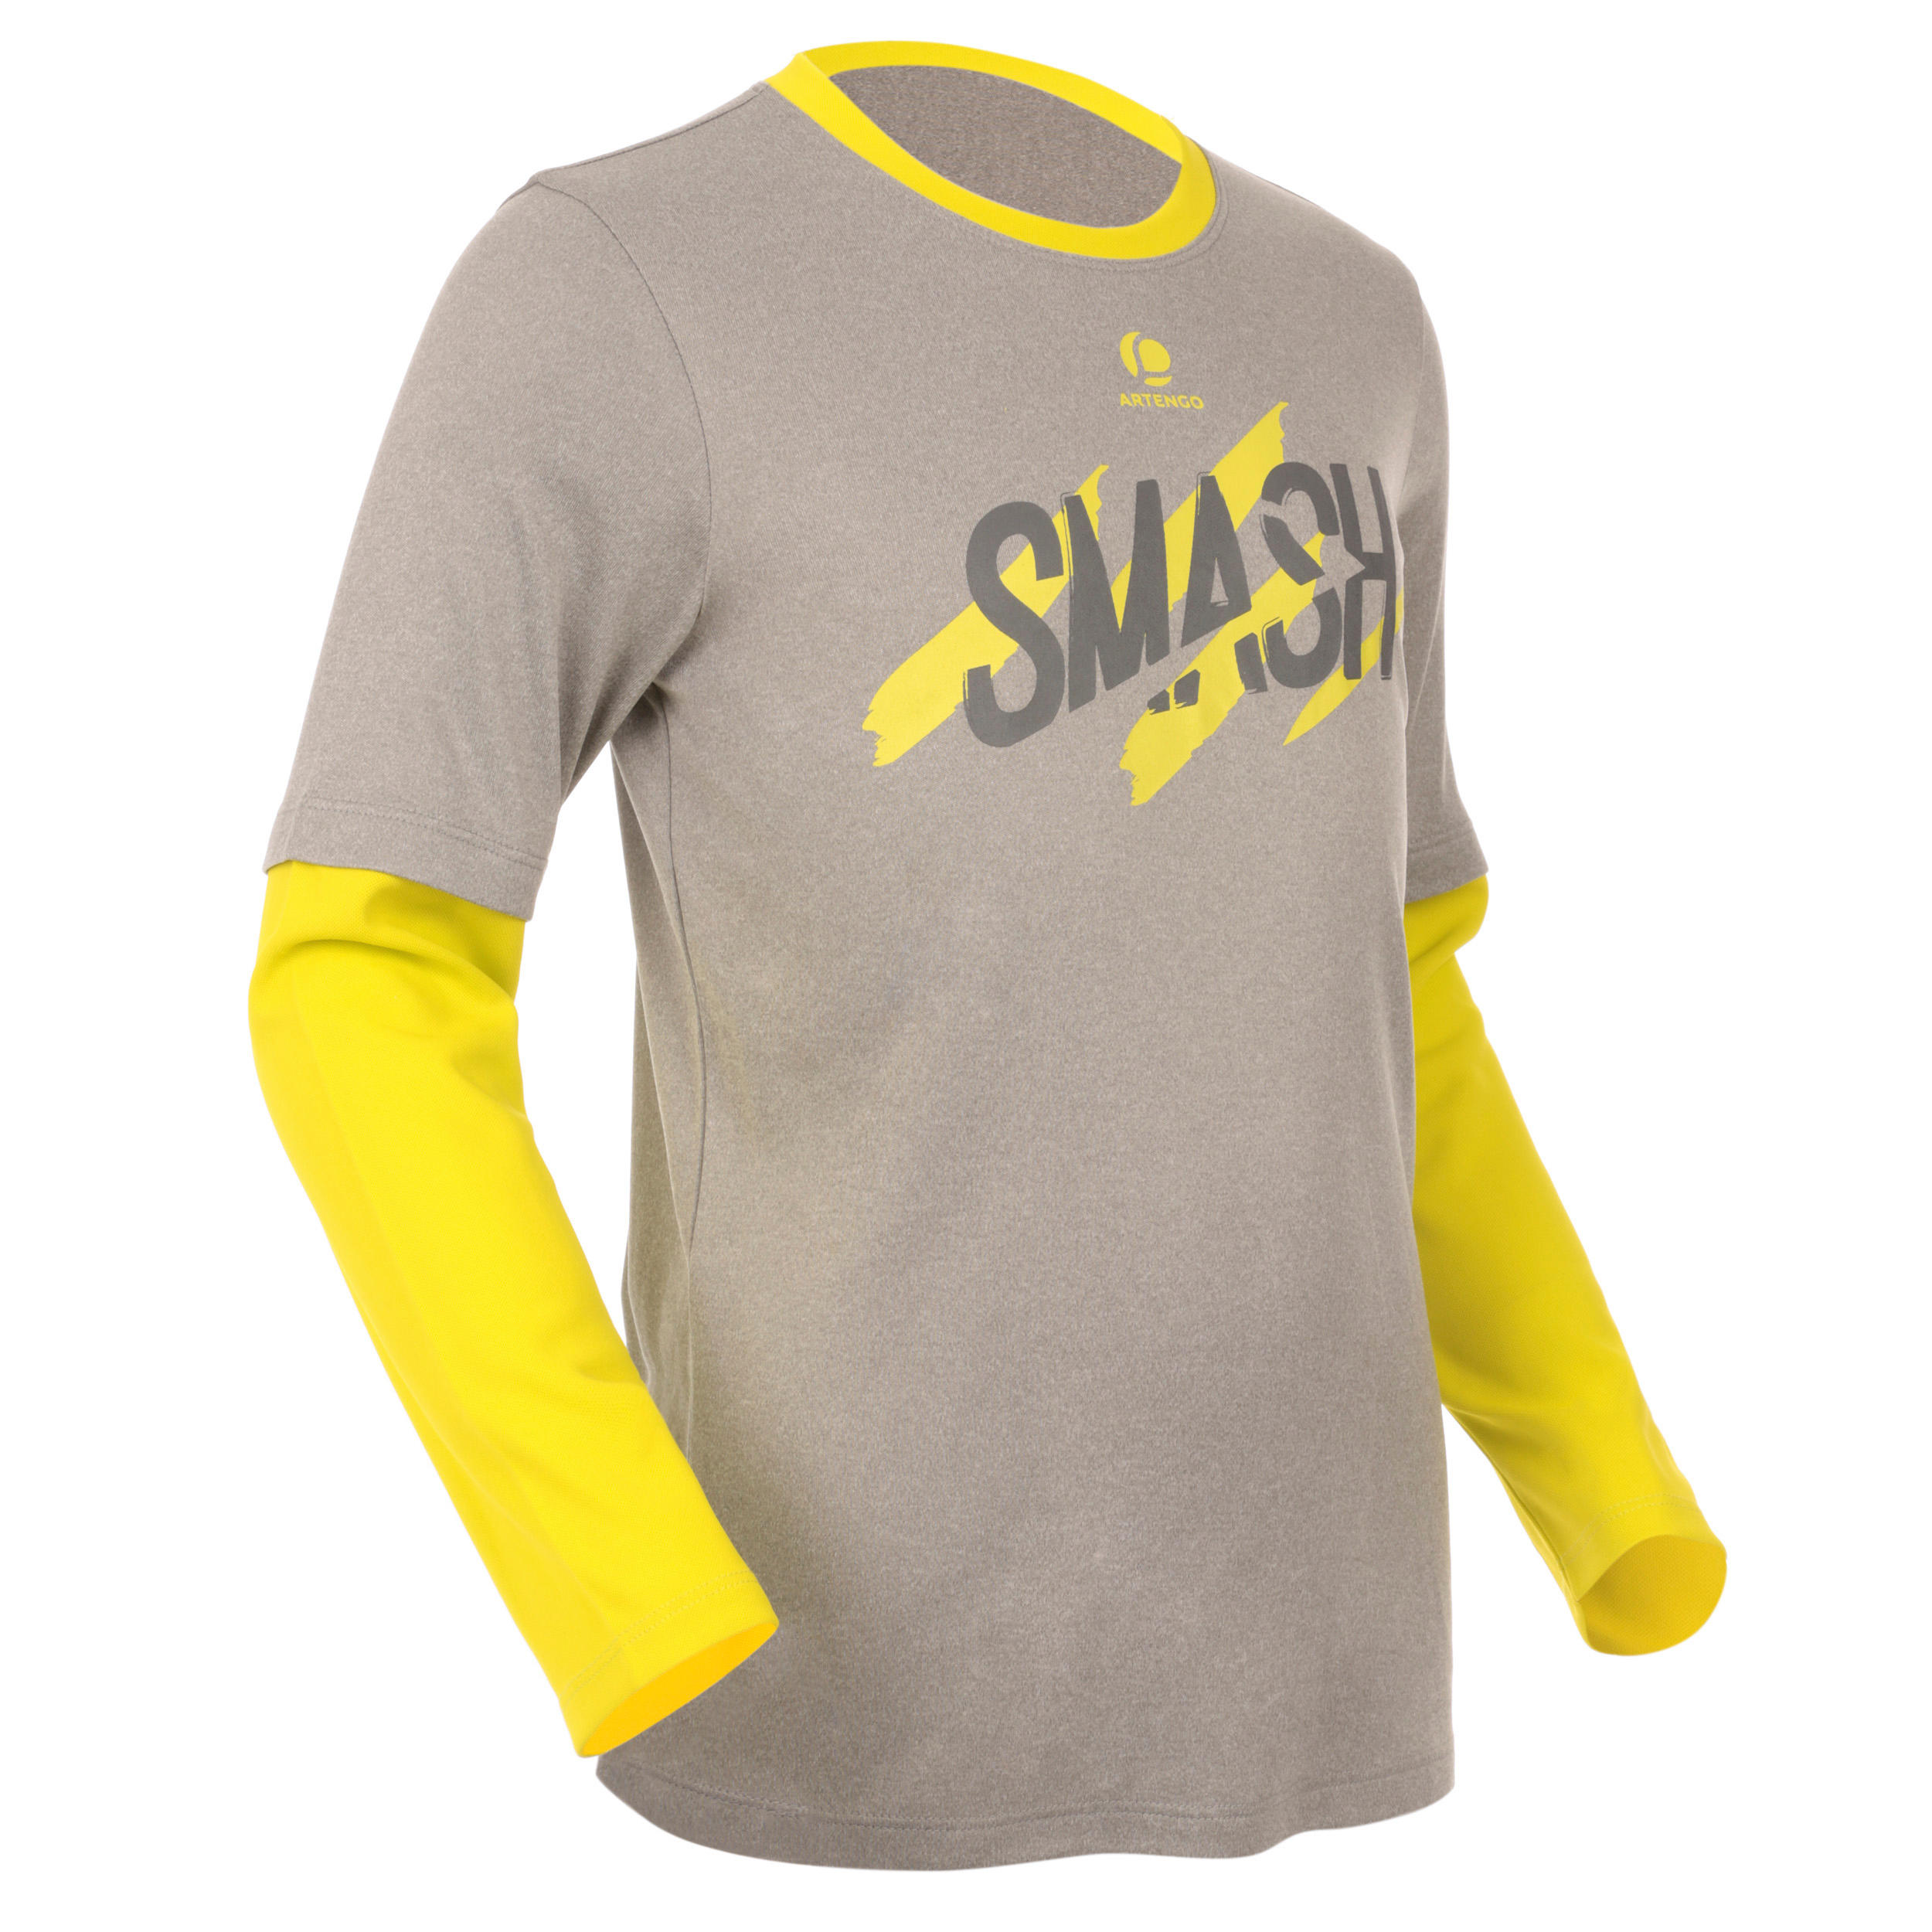 ARTENGO Essential Girls' Tennis Badminton T-Shirt - Grey Yellow Graphics